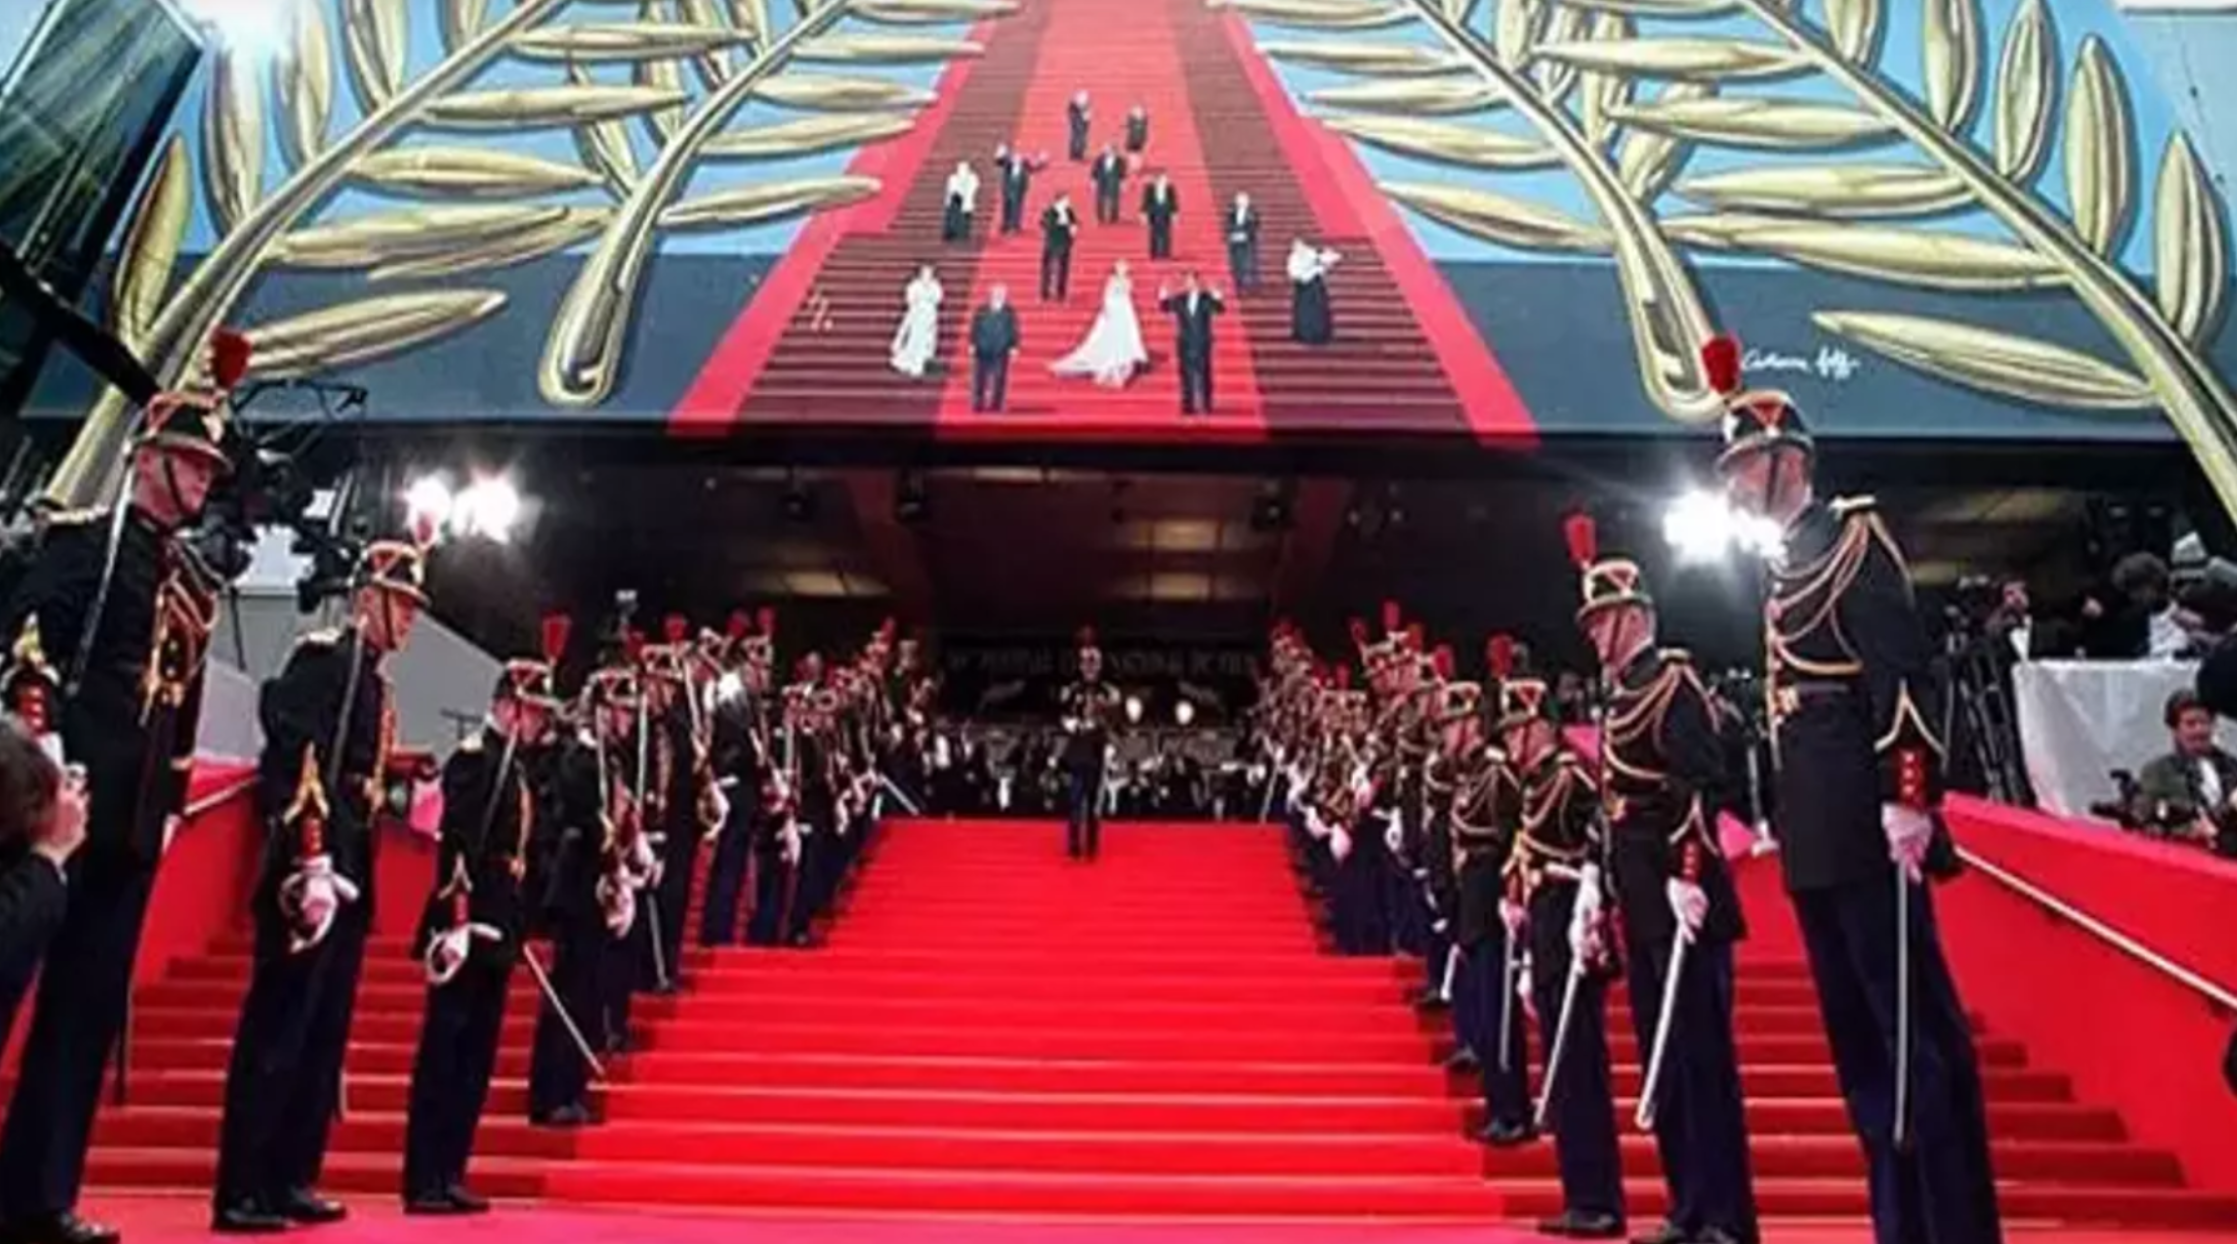 Mays aynn prestijli sanat etkinlii Cannes Film Festivali